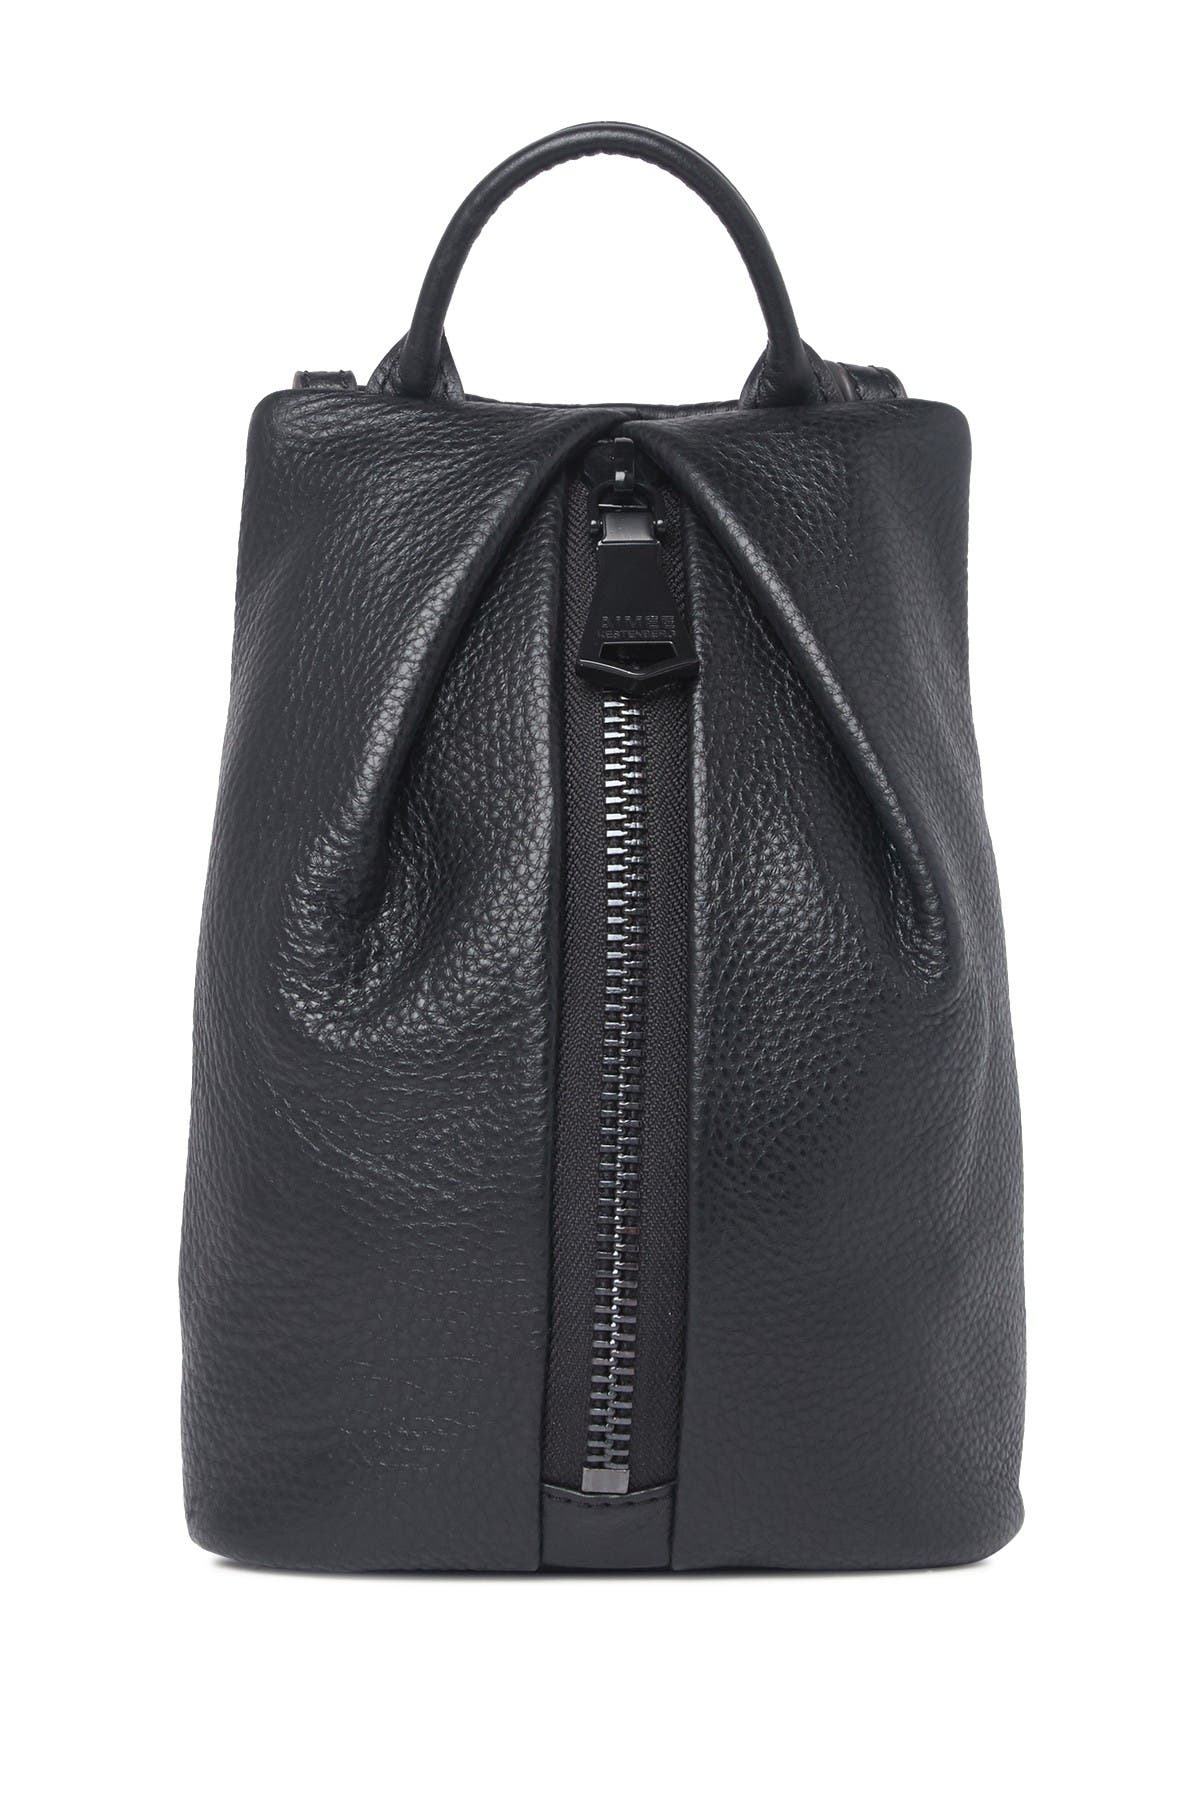 Aimee Kestenberg | Tamitha Mini Leather Crossbody Bag | Nordstrom Rack